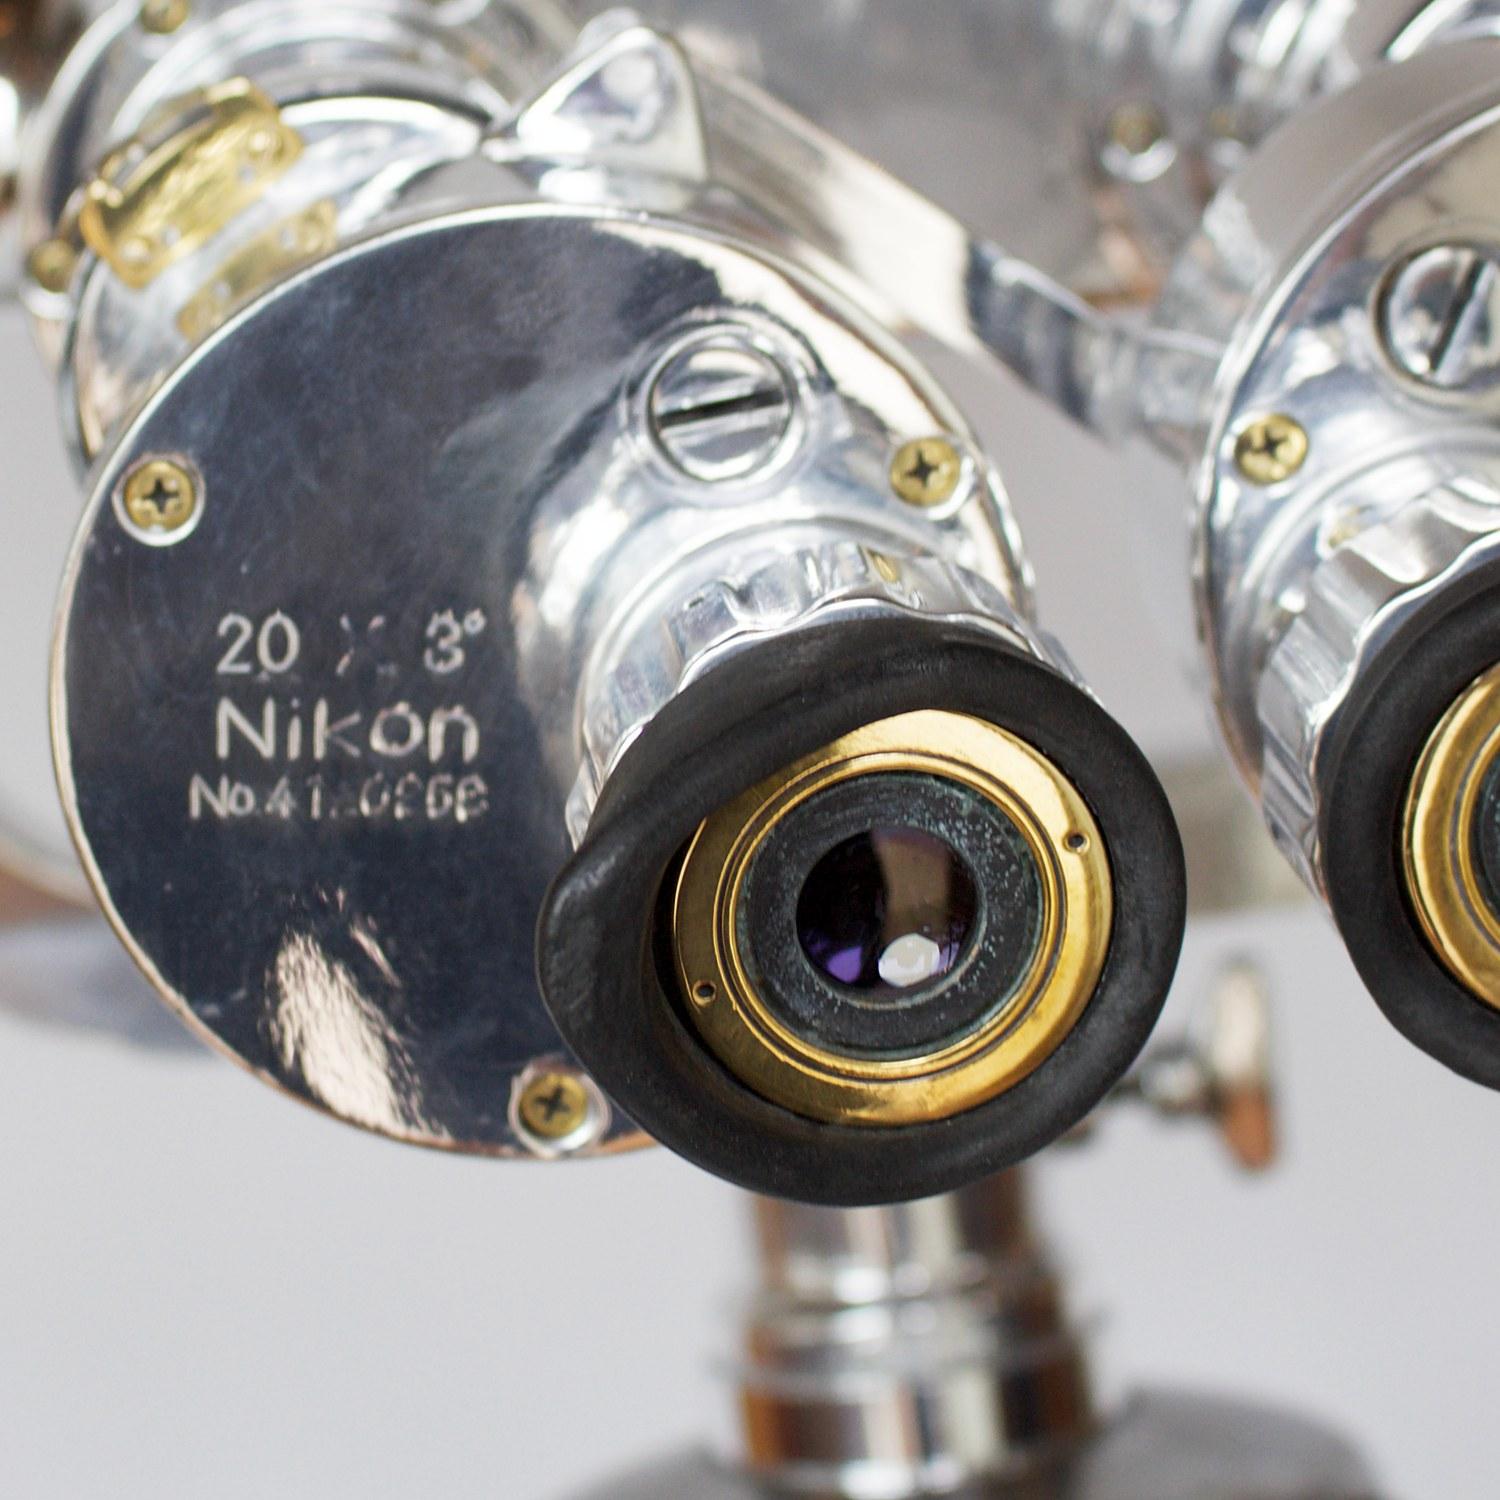 Japanese Nikon WW11 Naval Binoculars Chromed Metal and Brass Refurbished Optics